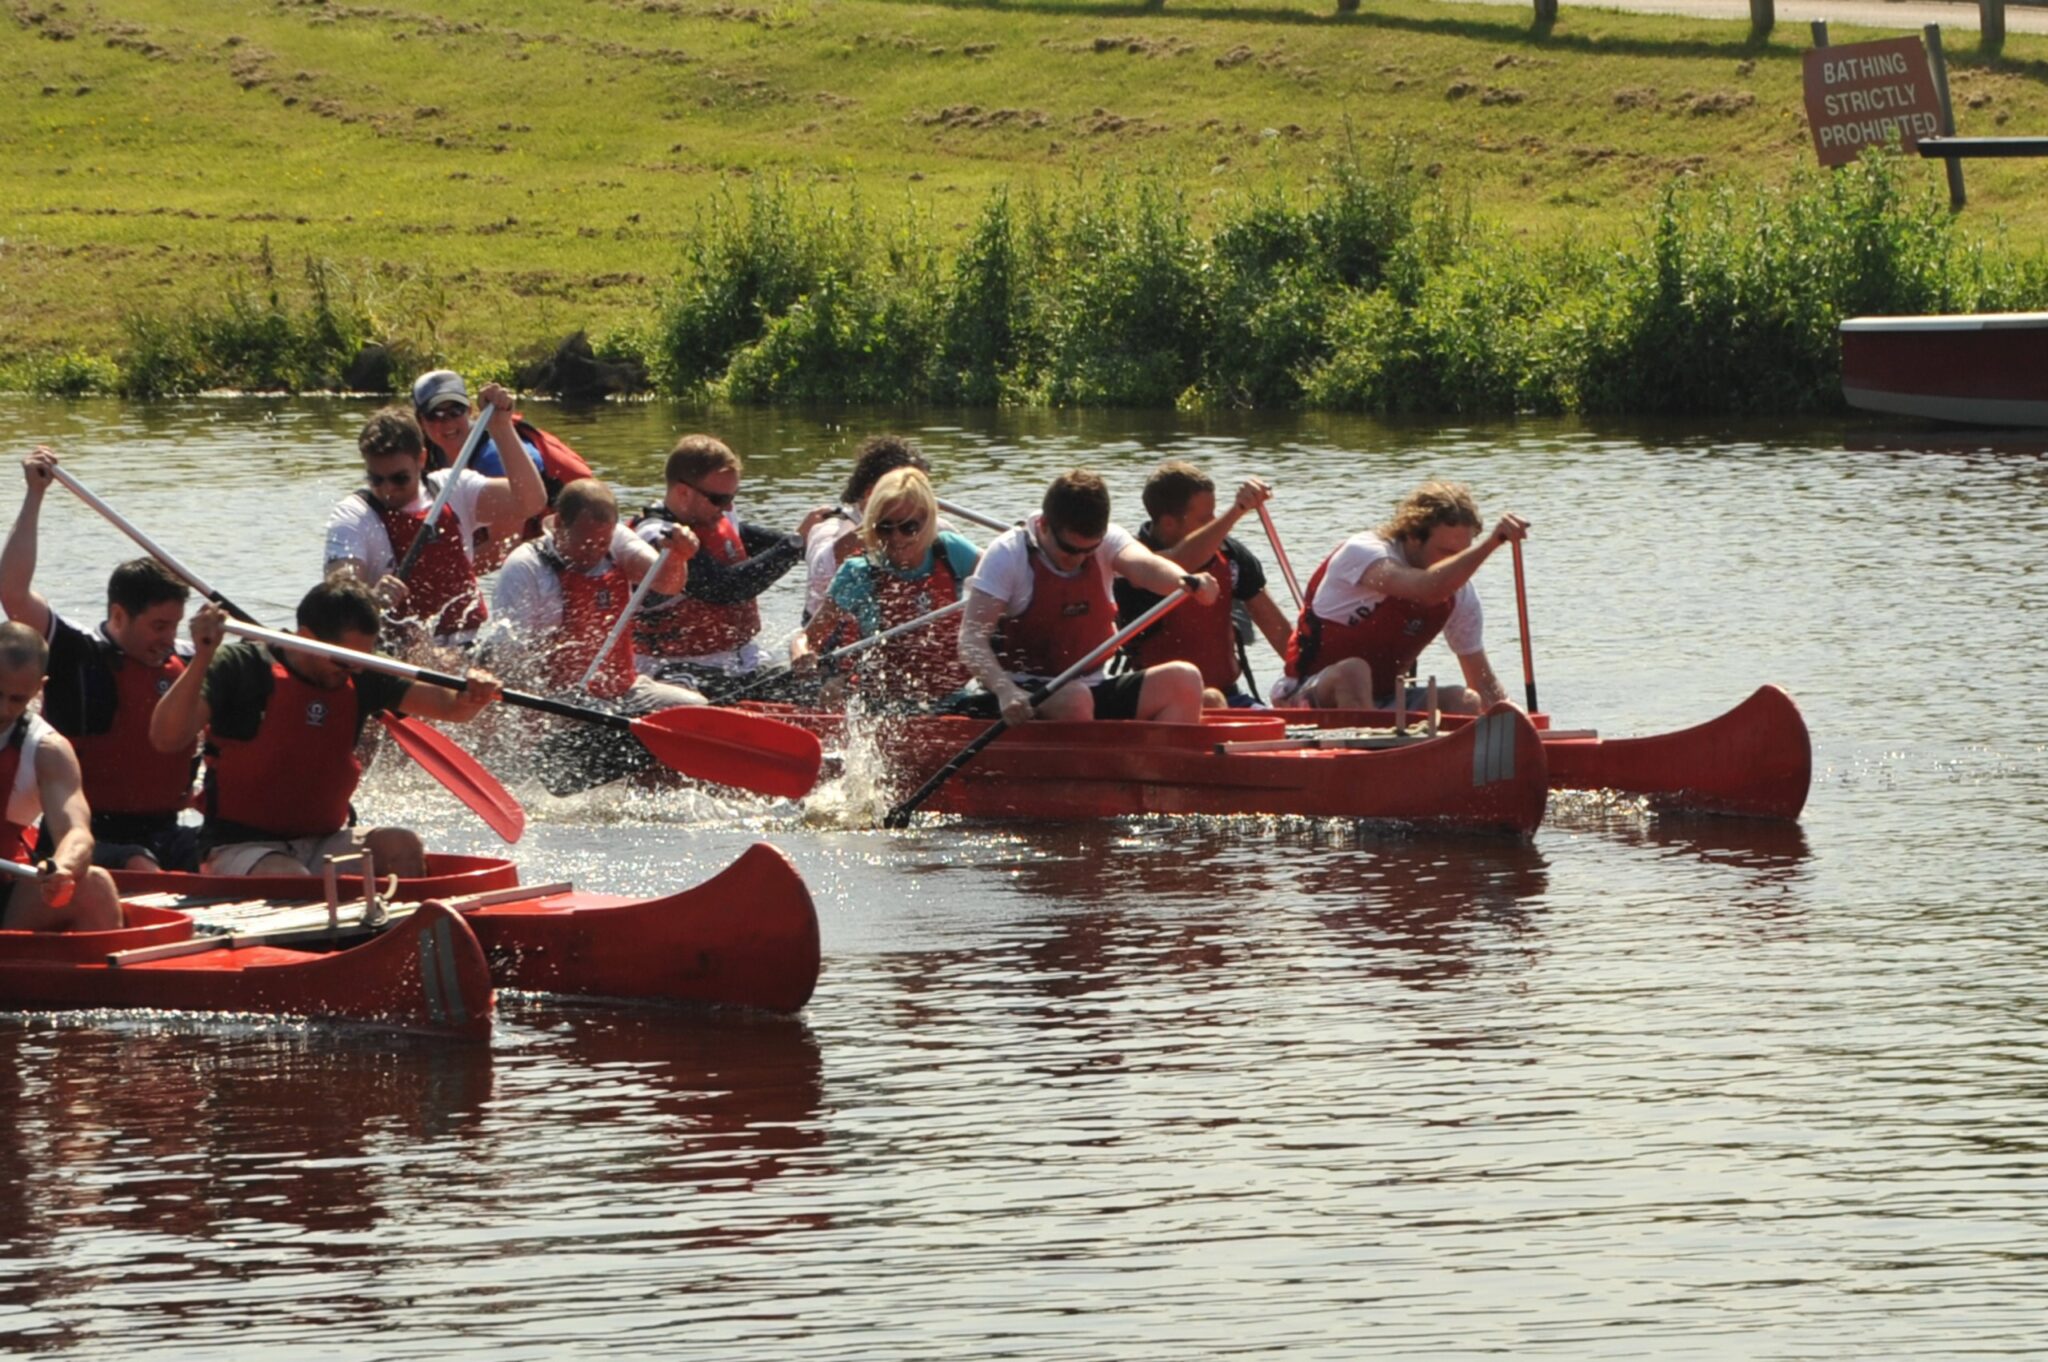 Daisy Chain Charity Boat Race